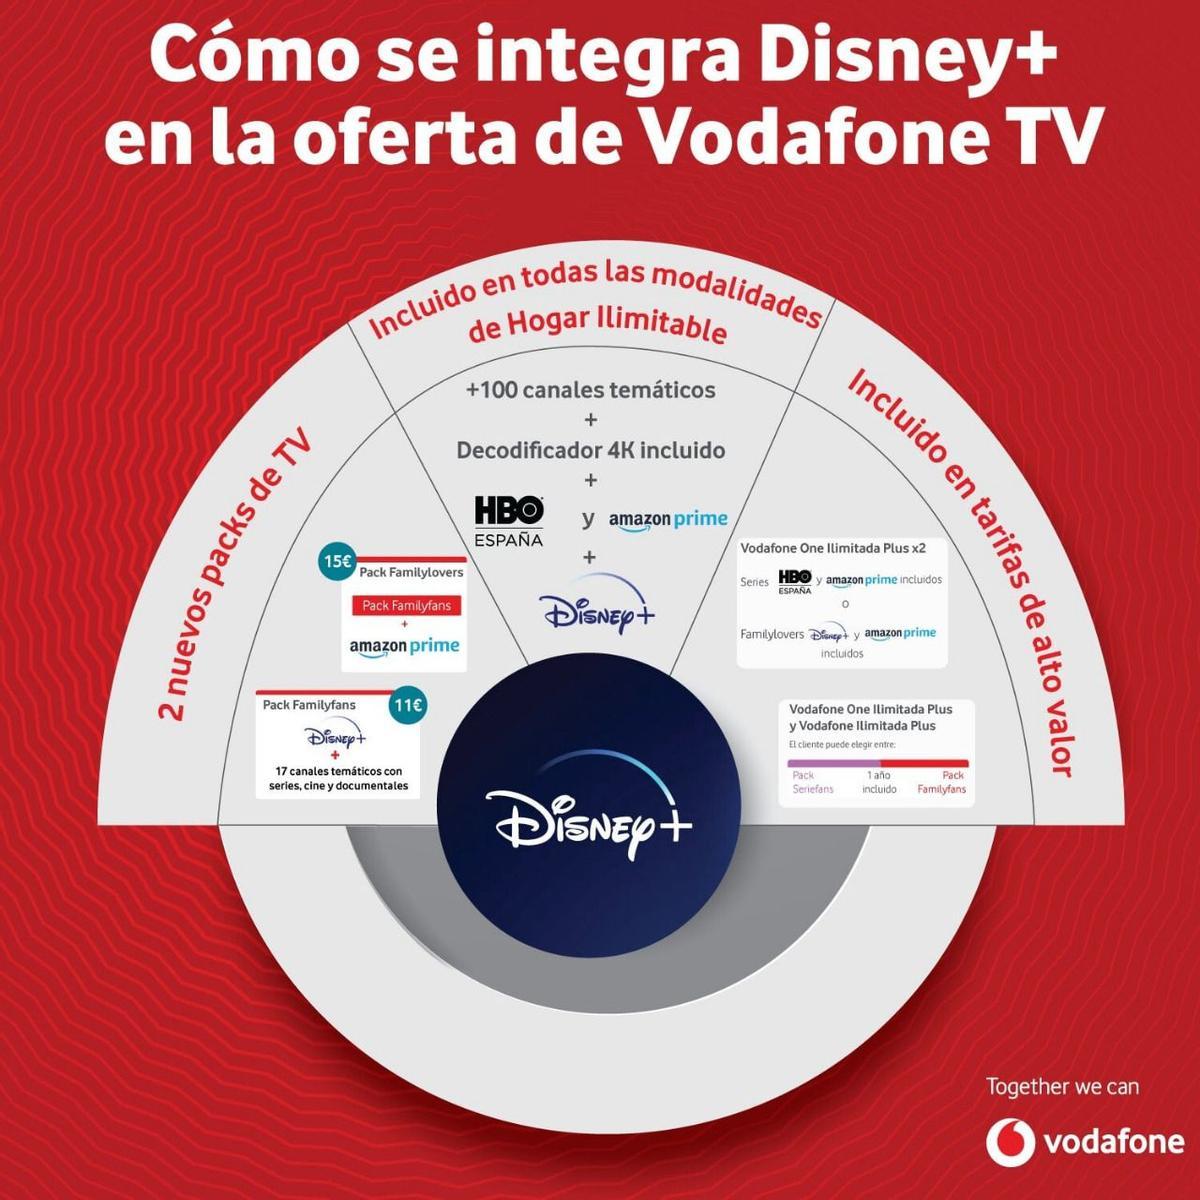 Vodafone integra Disney+ a sus tarifas de VodafoneTV